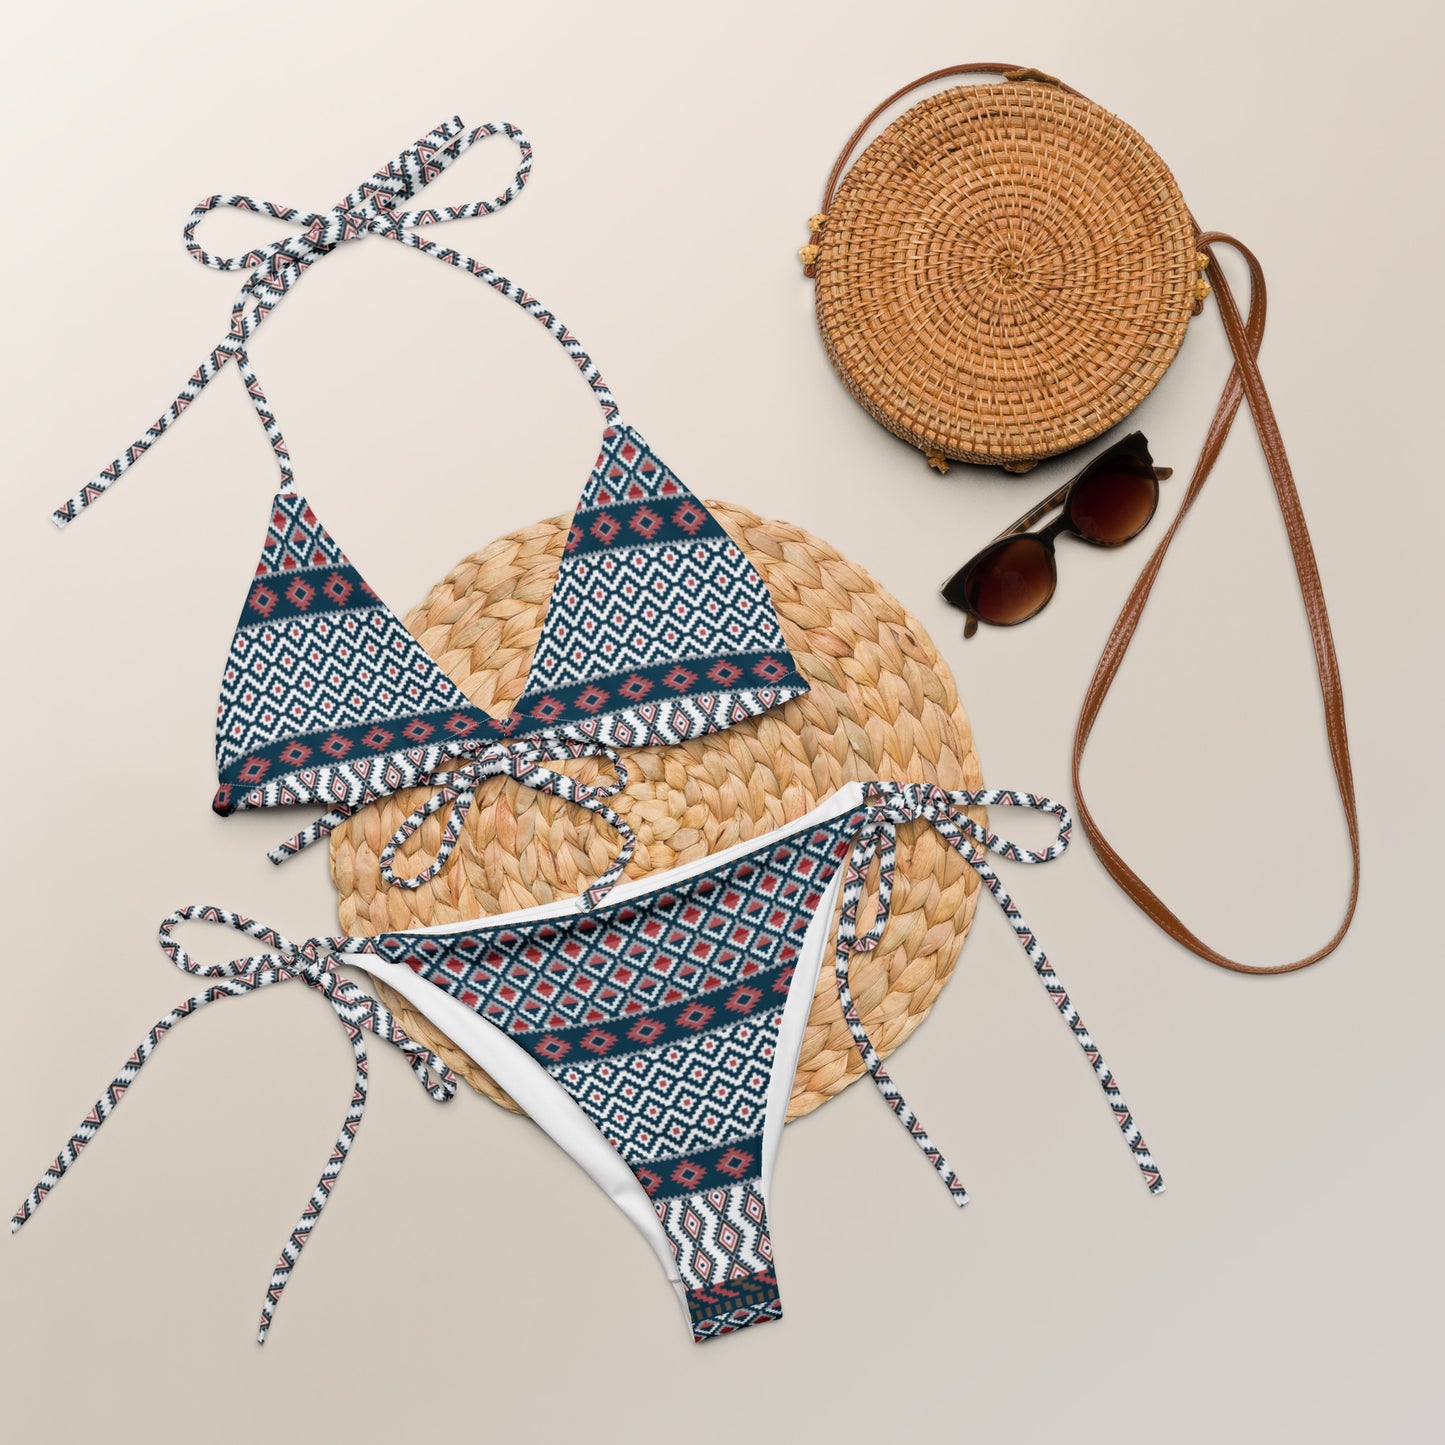 String Bikini (Glamourange Women Swimwear By Patterns - 0035 Model)